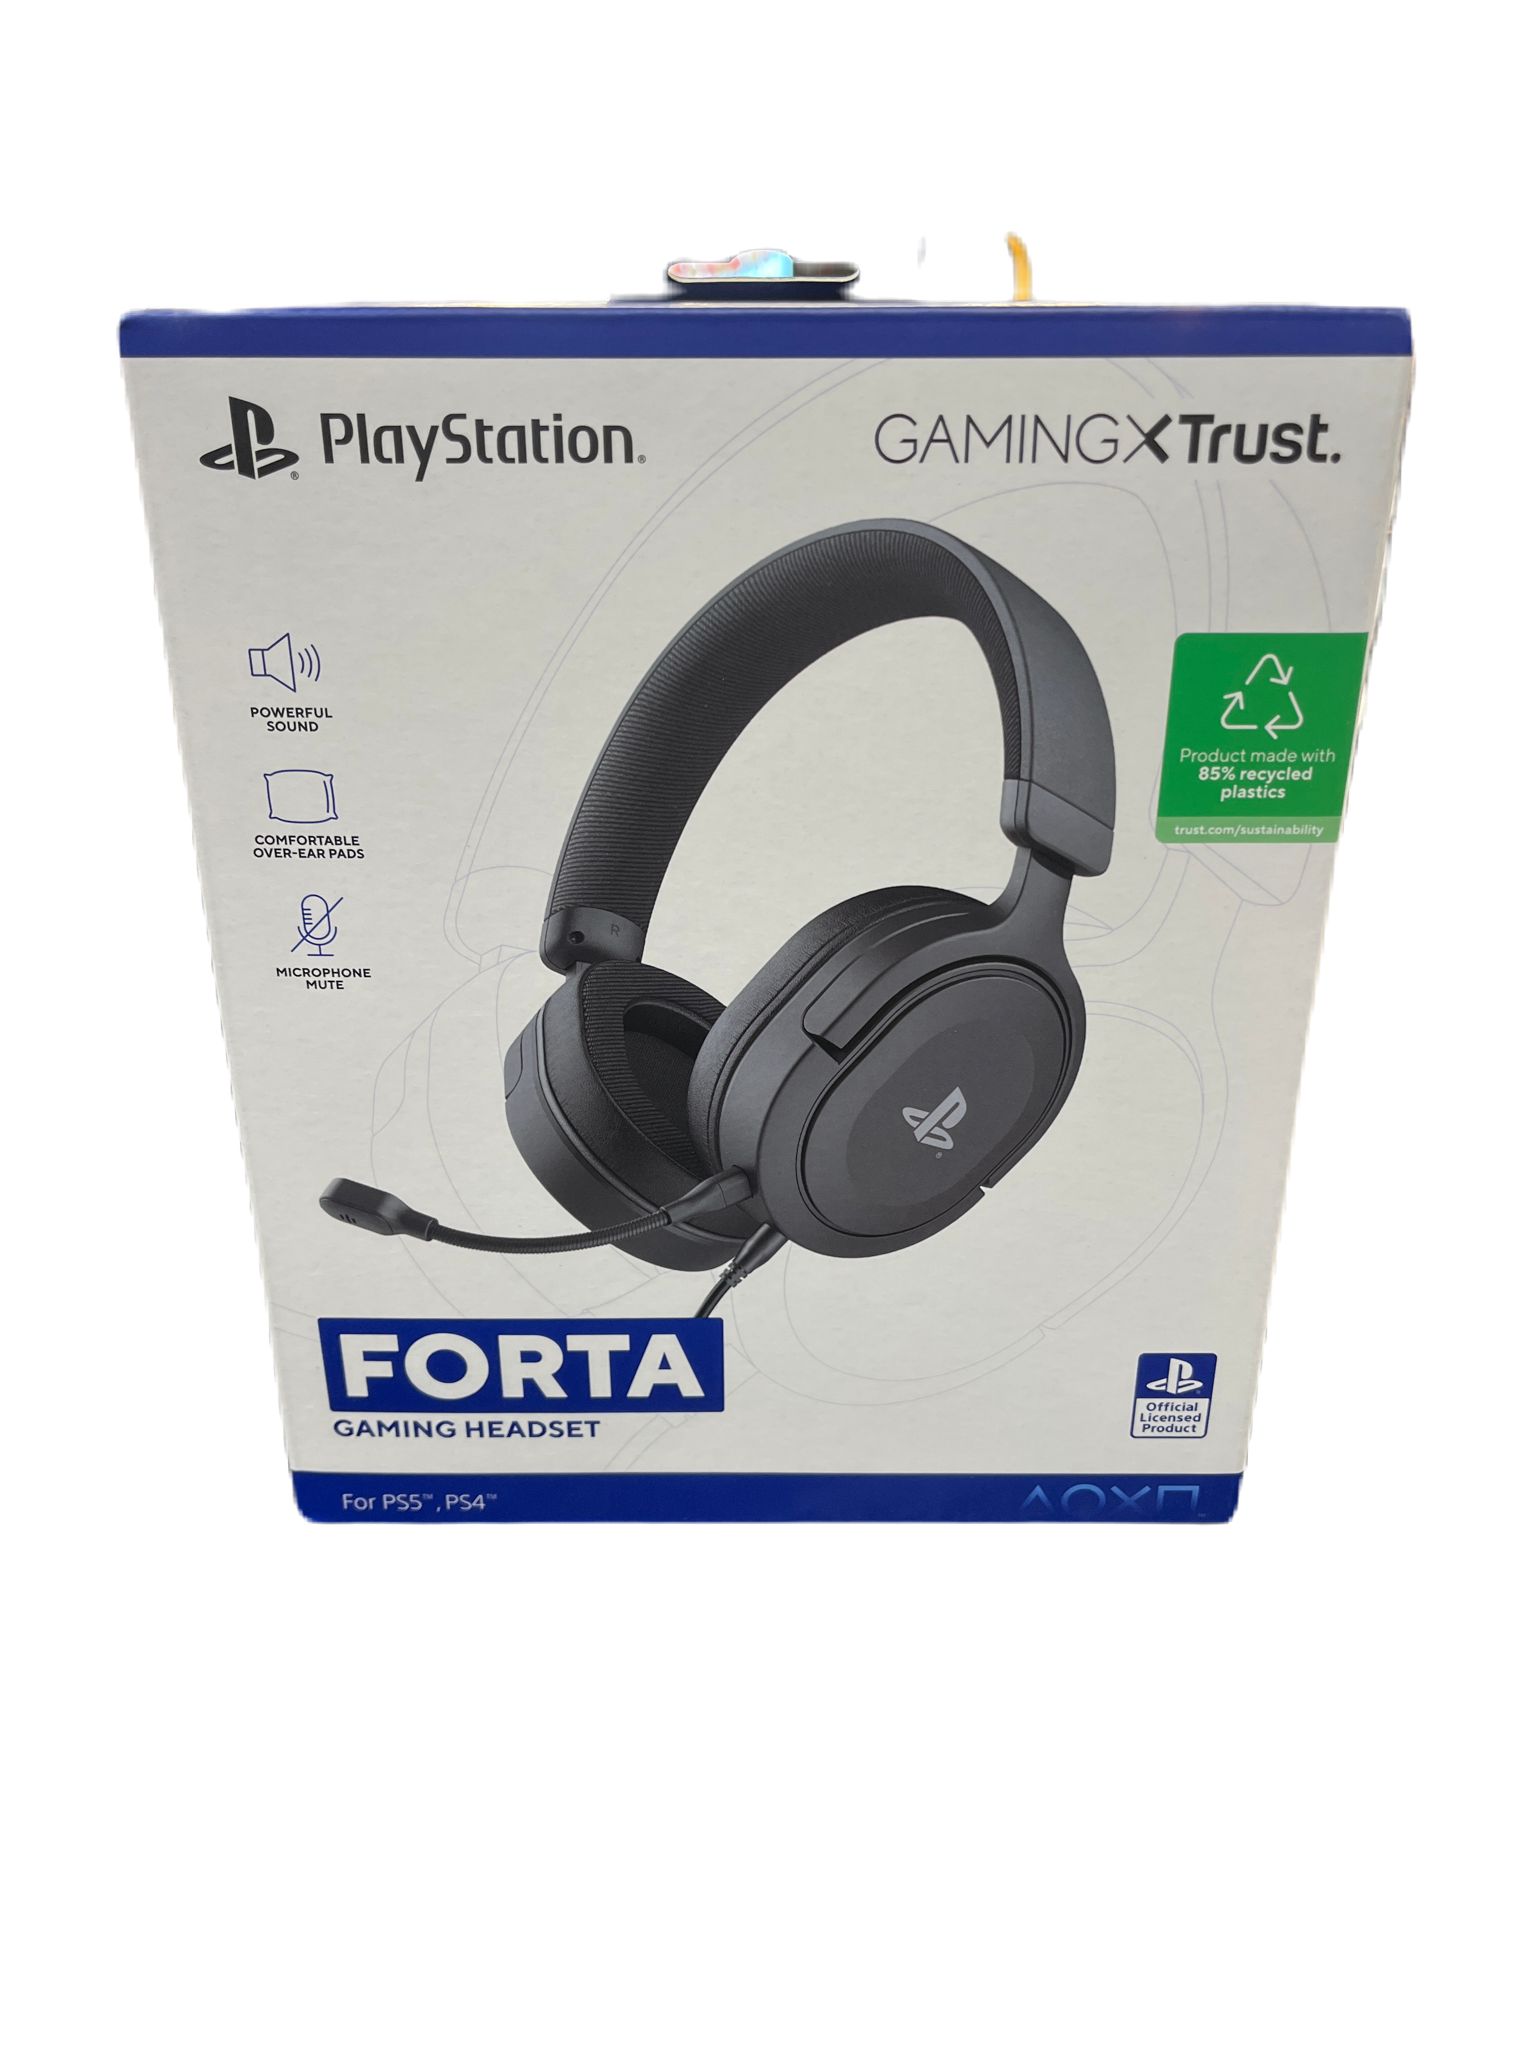 PlayStation GamingXtrust FORTA Gaming Headset 